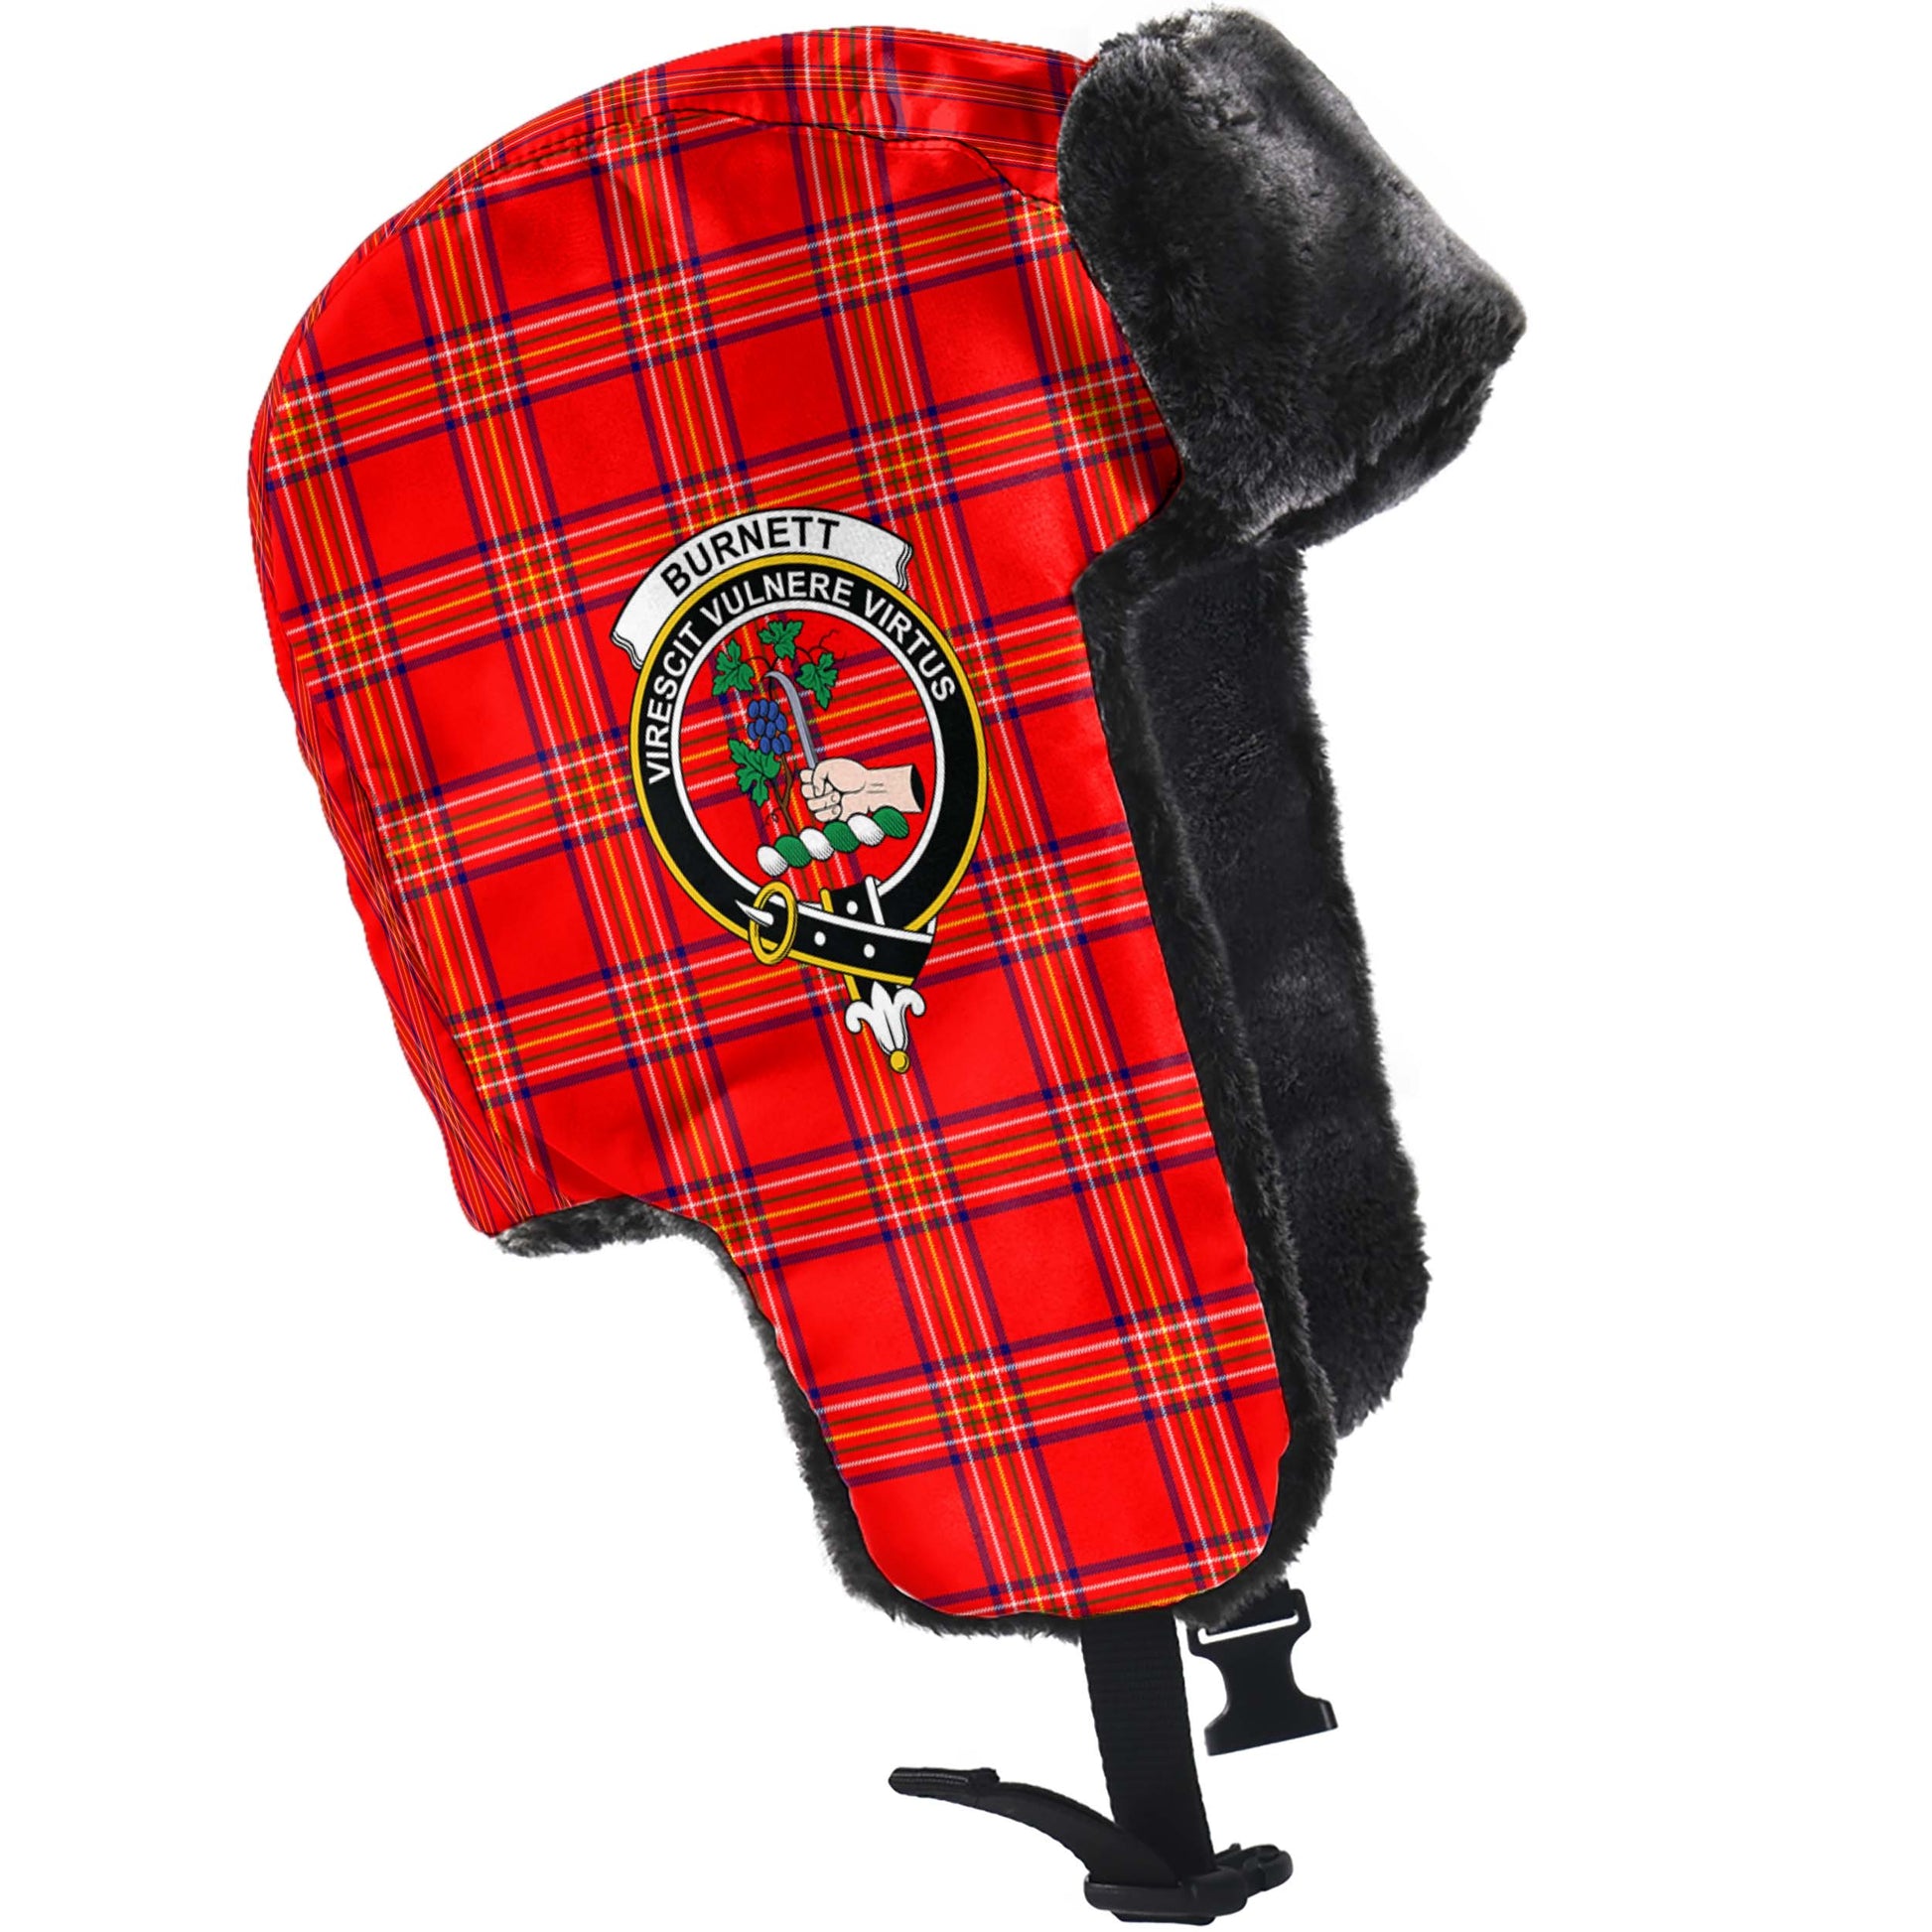 Burnett Modern Tartan Winter Trapper Hat with Family Crest - Tartanvibesclothing